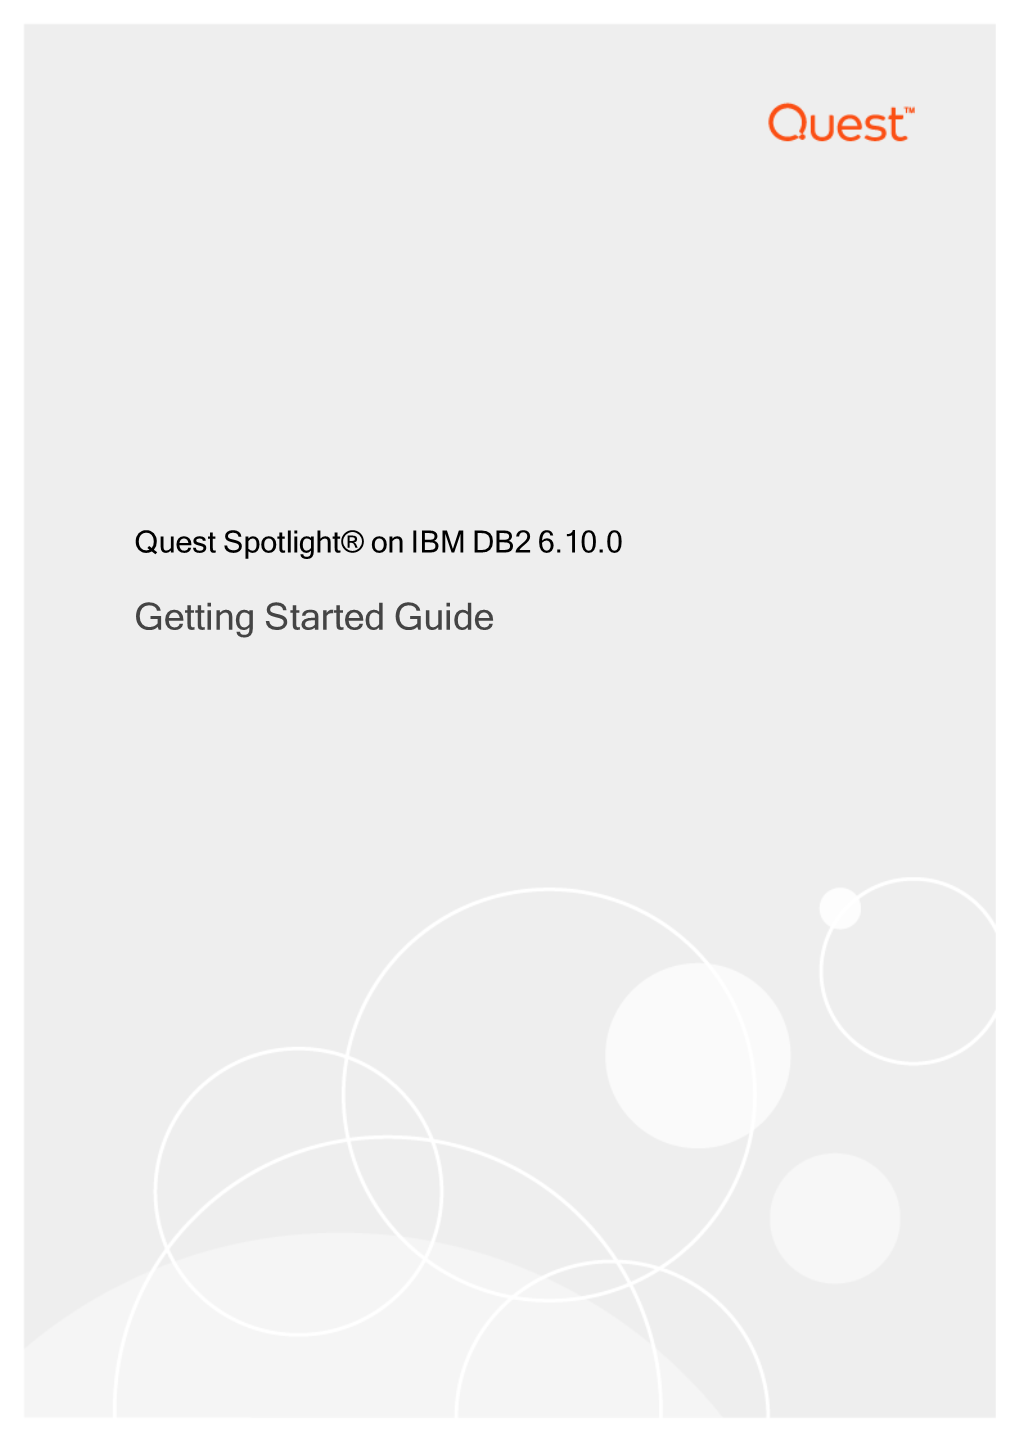 Spotlight on IBM DB2 Getting Started Guide